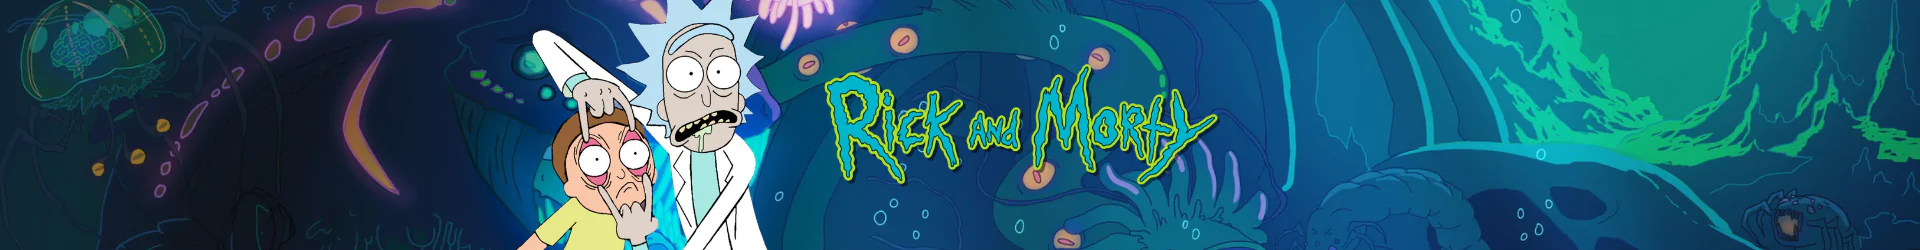 Rick and Morty figuren banner